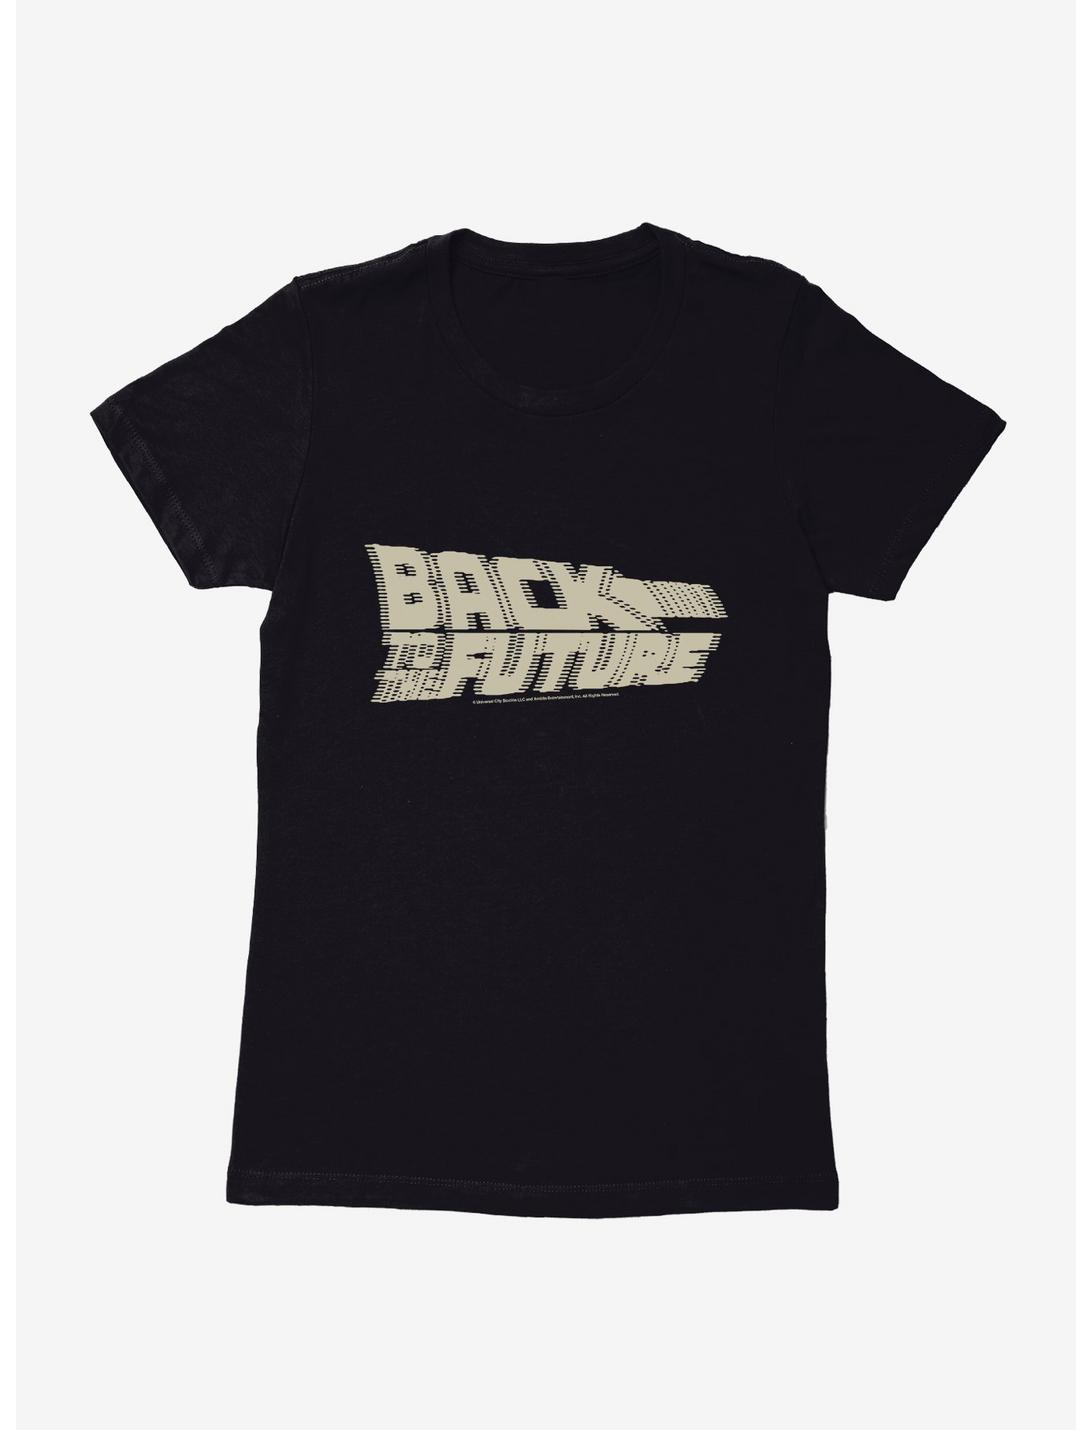 Back To The Future Blurred Script Womens T-Shirt, BLACK, hi-res